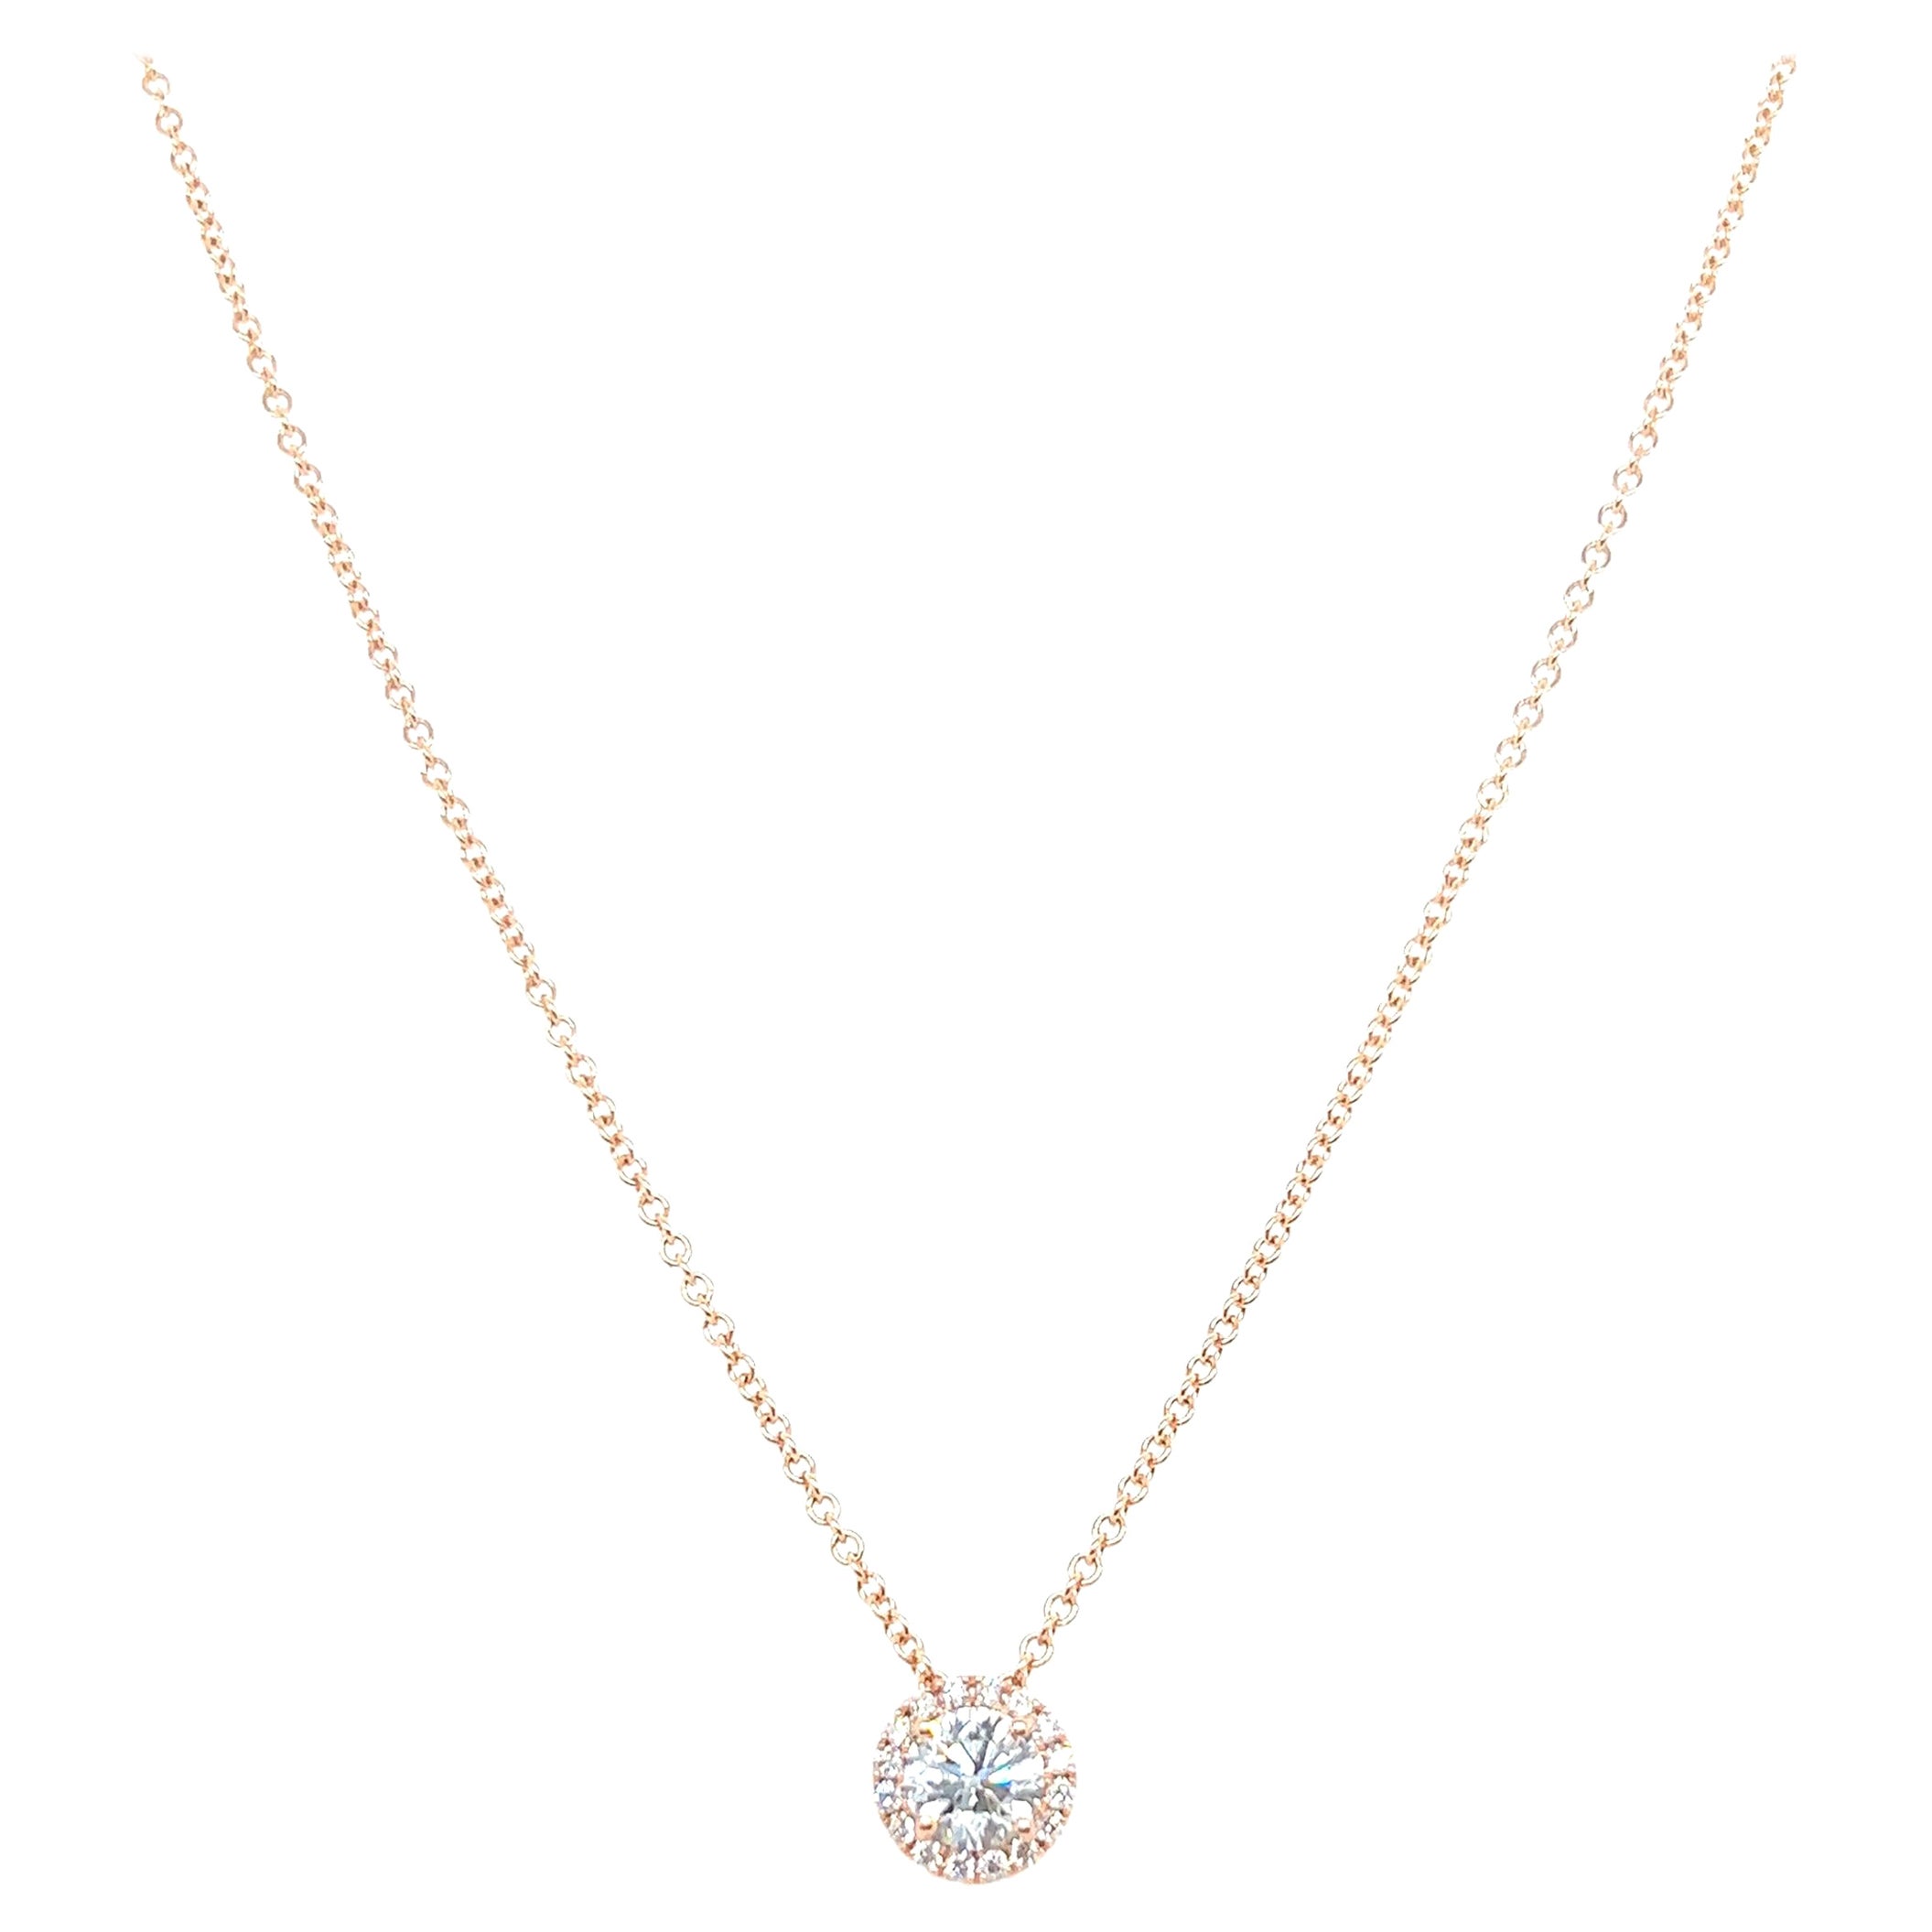 24 Inch 14k White Gold 1.15 Carat Round Cut Diamond Solitaire Pendant Necklace For Sale